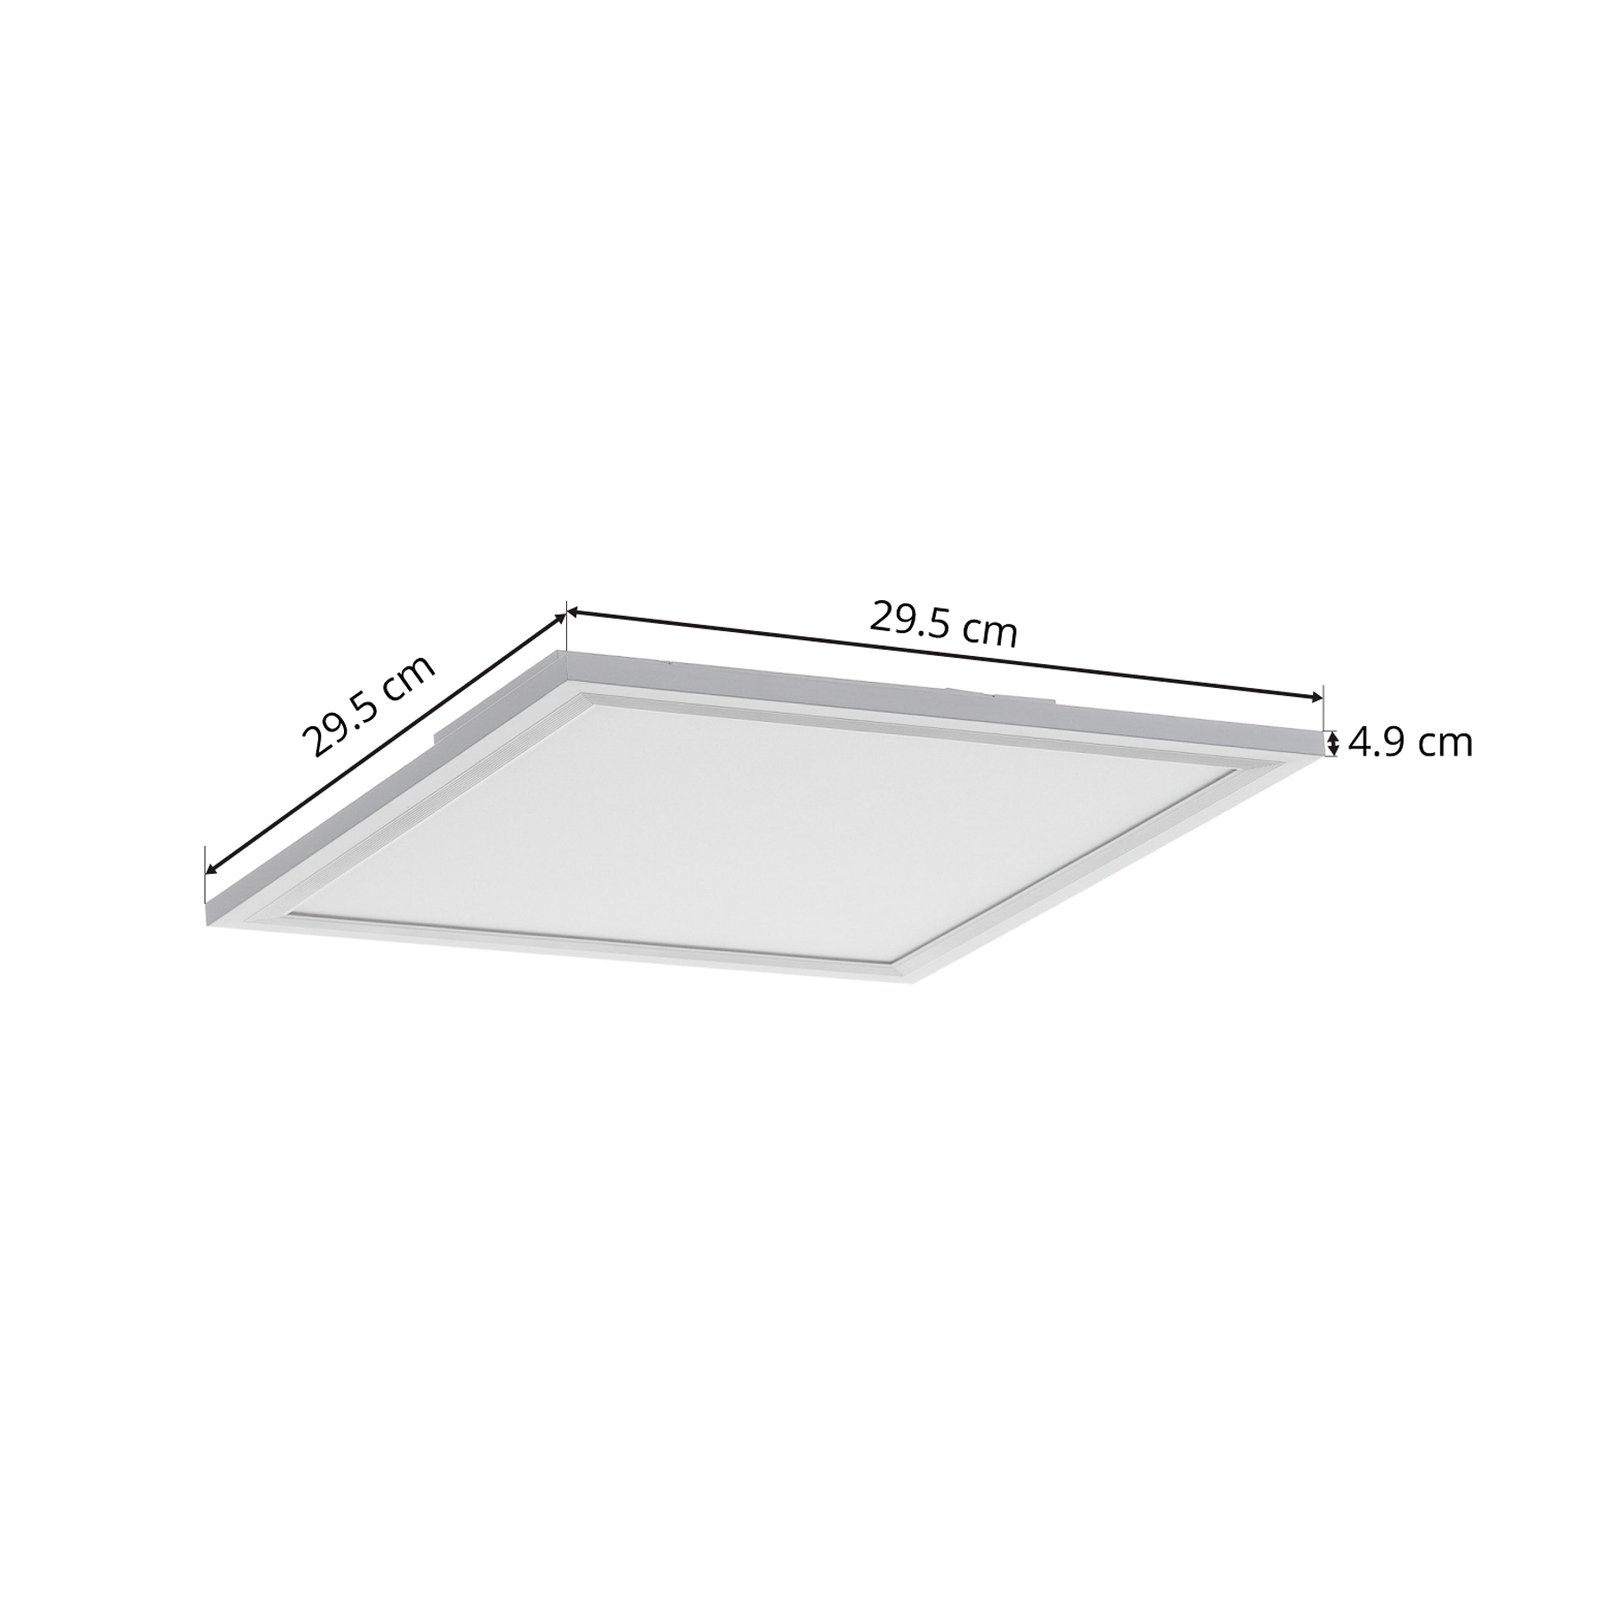 LED plafondlamp Piatto, sensor, 29,5 x 29,5 cm